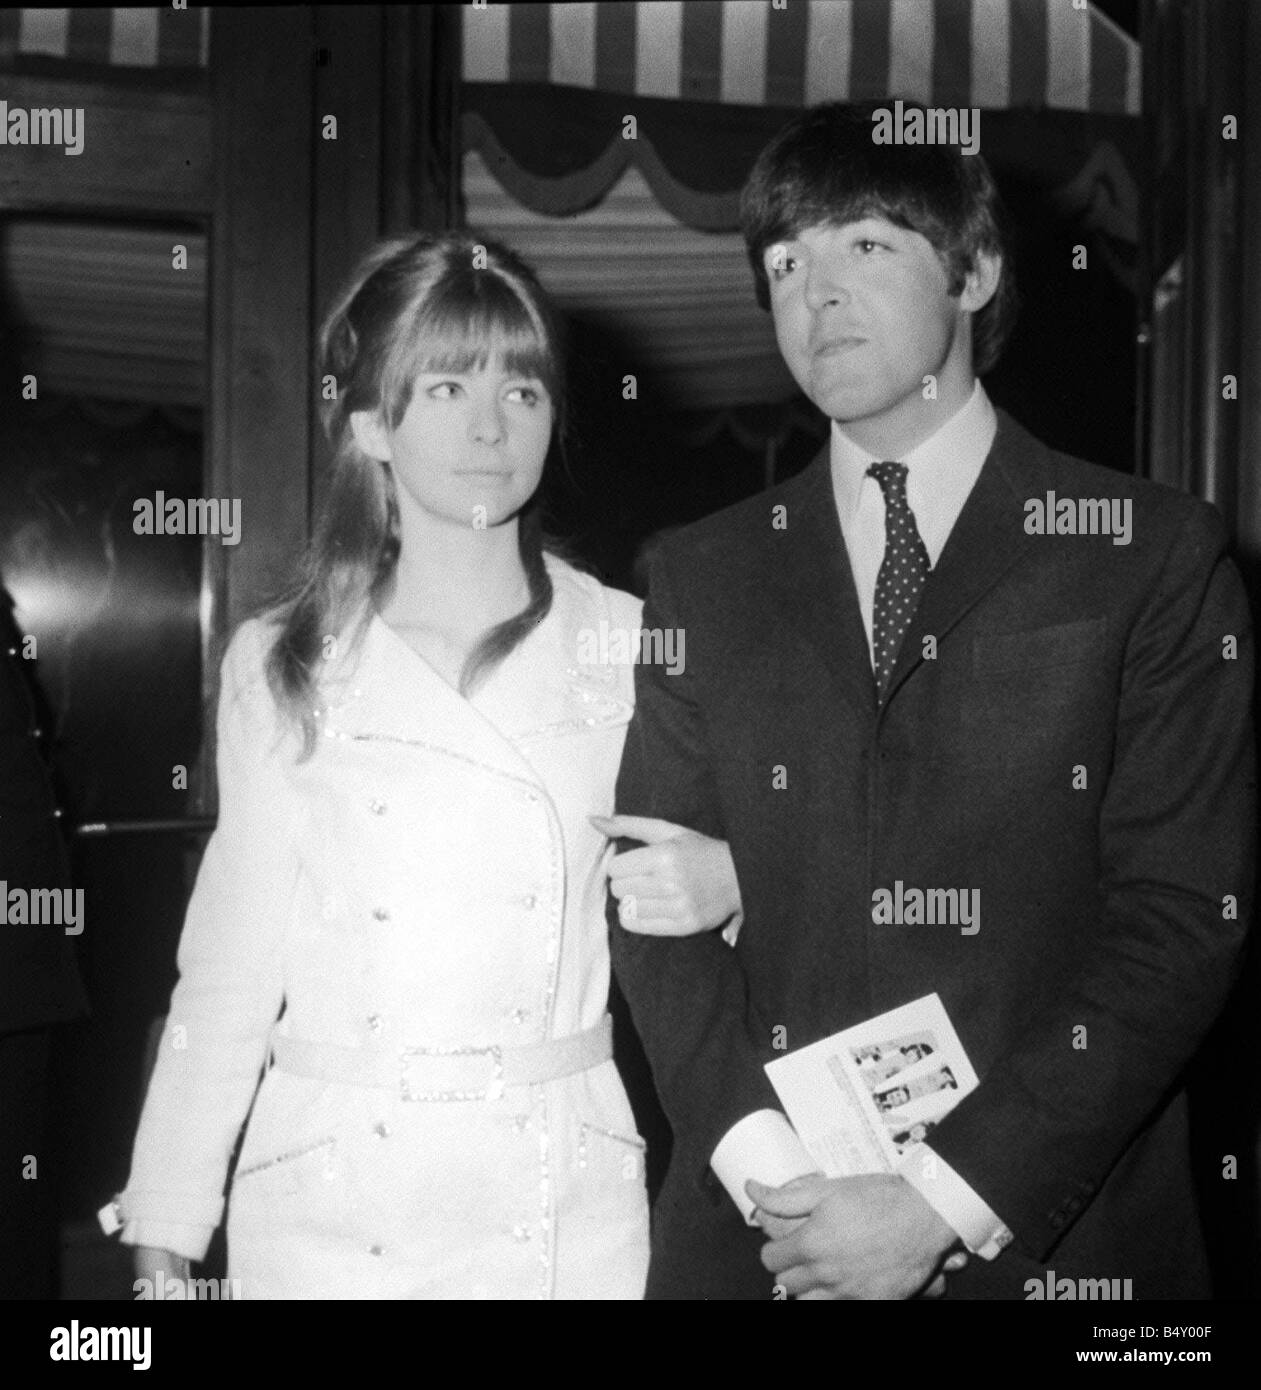 Paul McCartney March 1966 with Jane Asher Stock Photo - Alamy